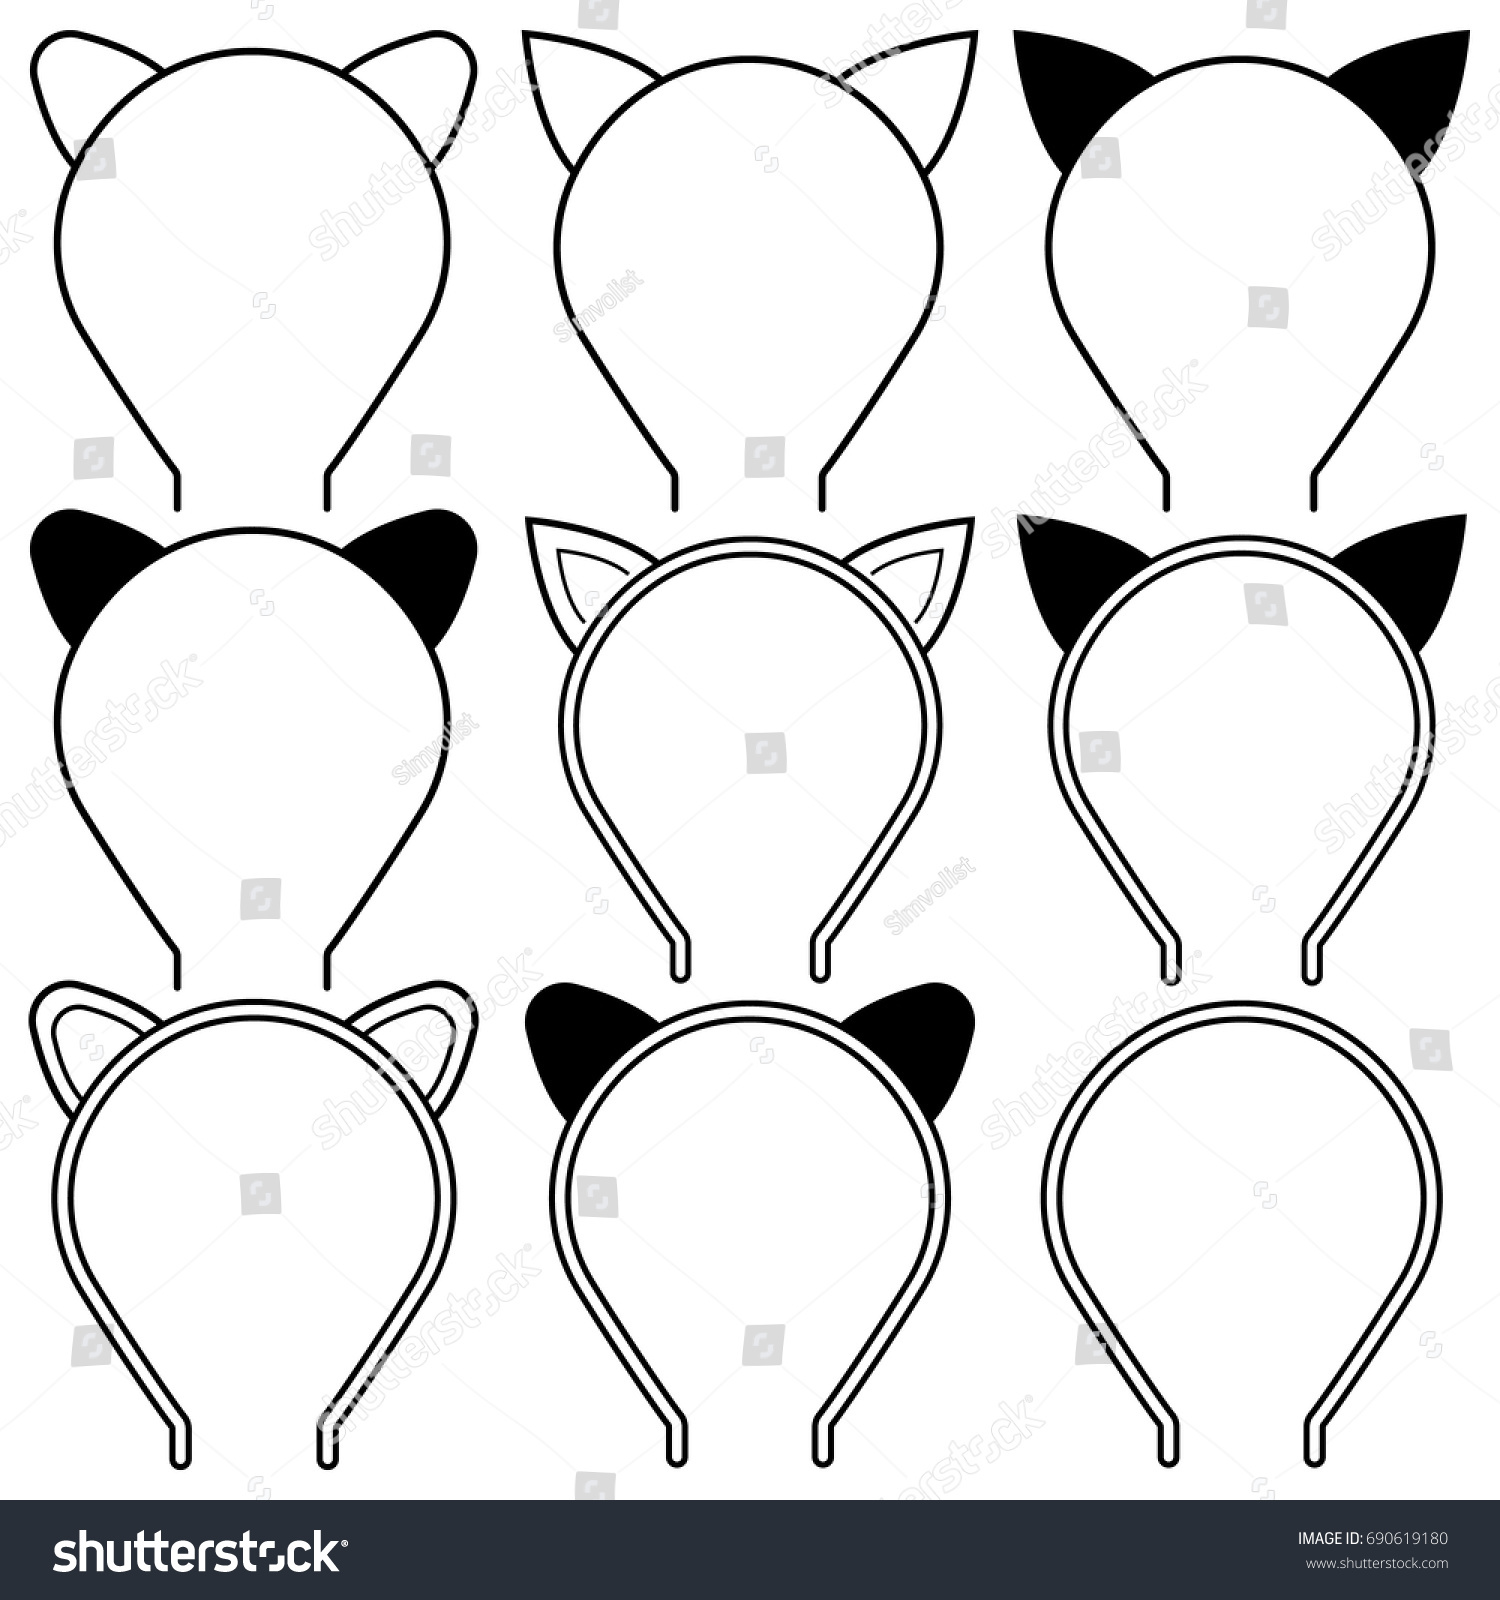 Set Icons Cat Ears Headband Girl Stock Vector 690619180 - Shutterstock